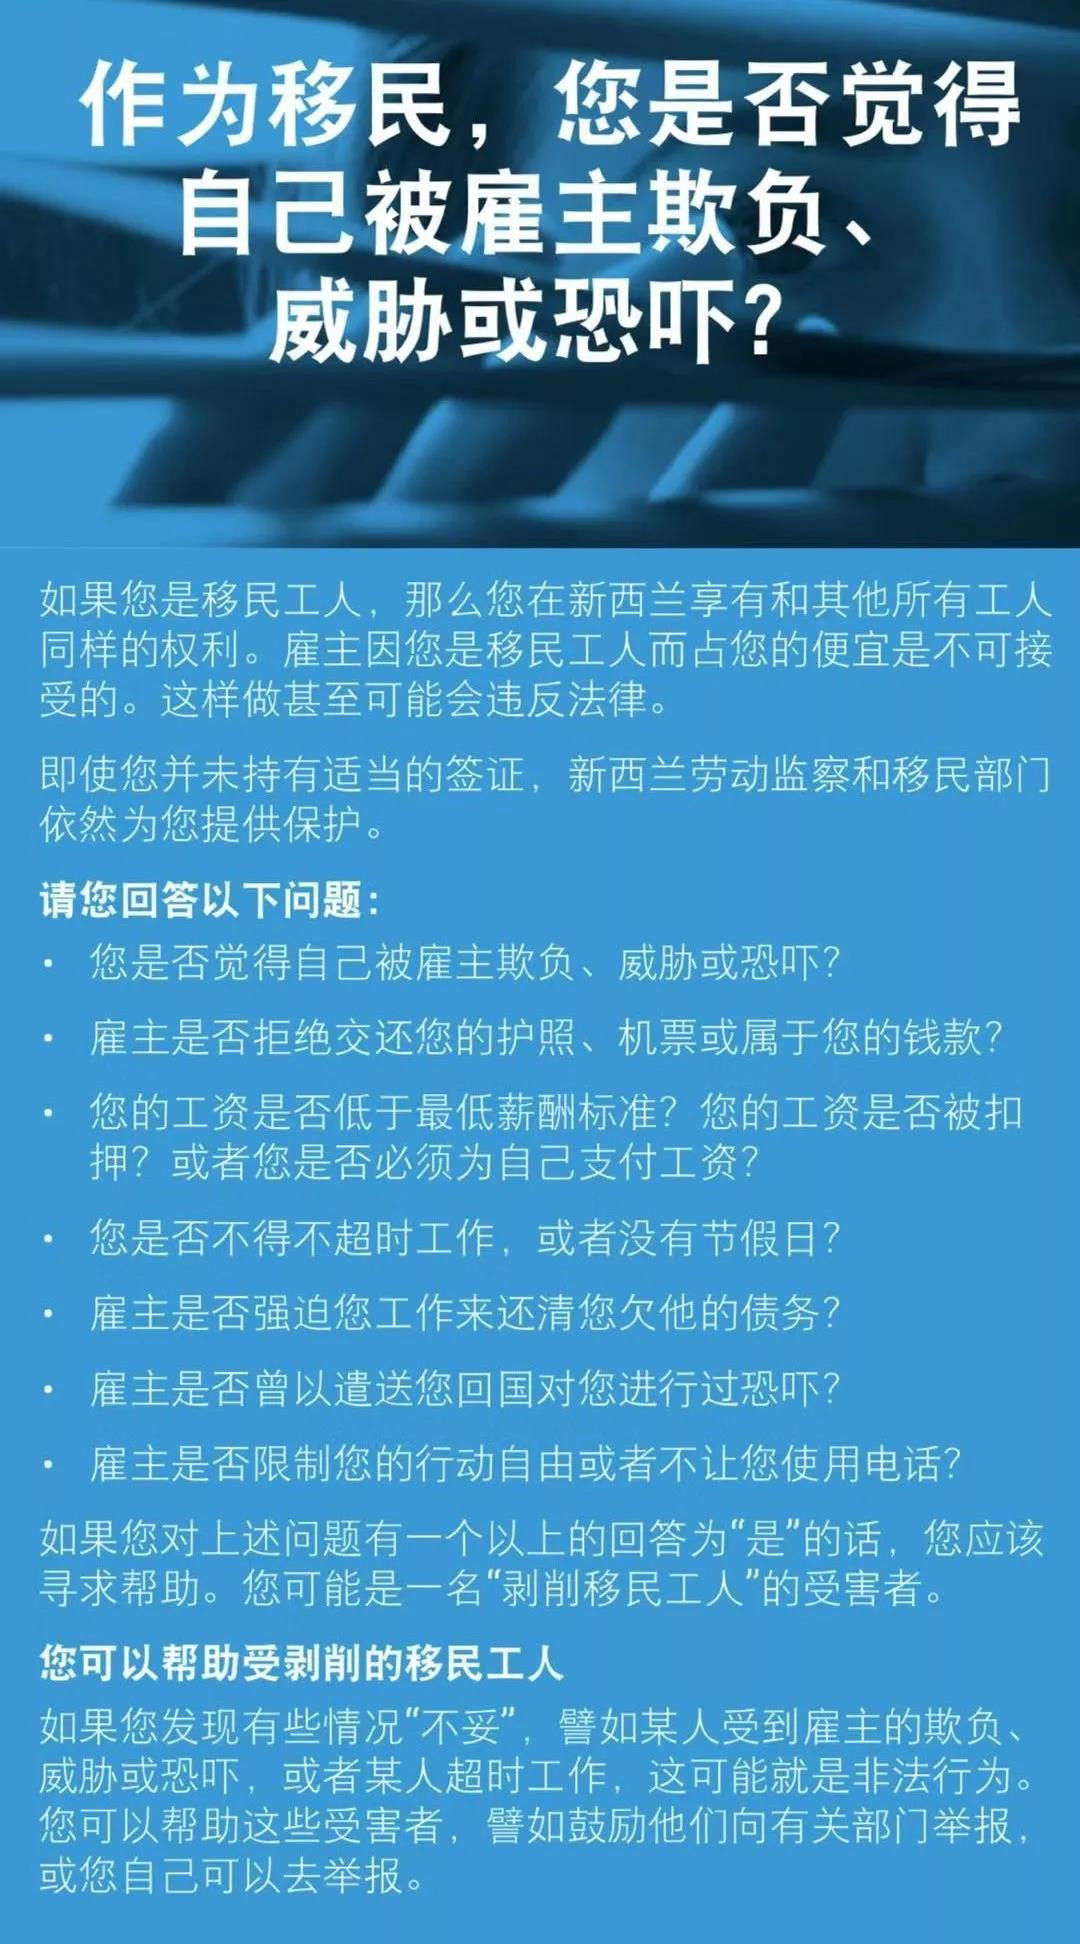 WeChat Image 20191217121727